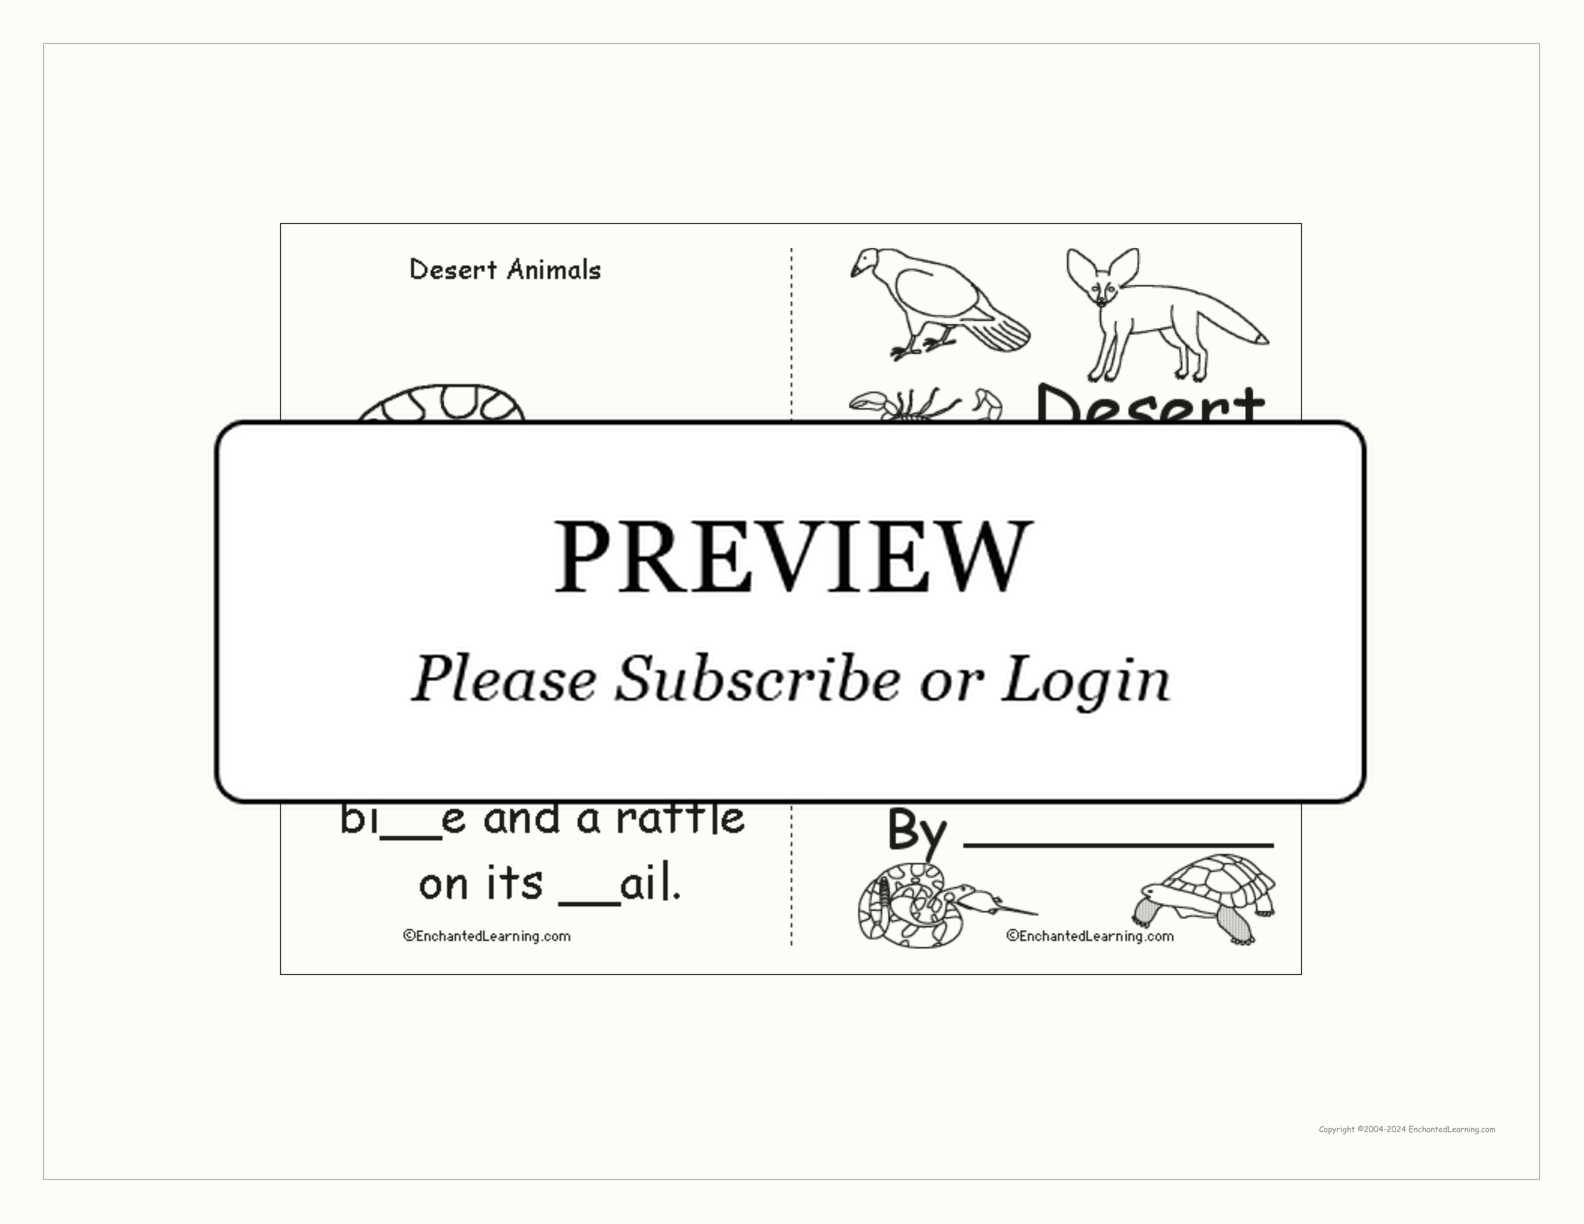 Desert Animals Book interactive printout page 1